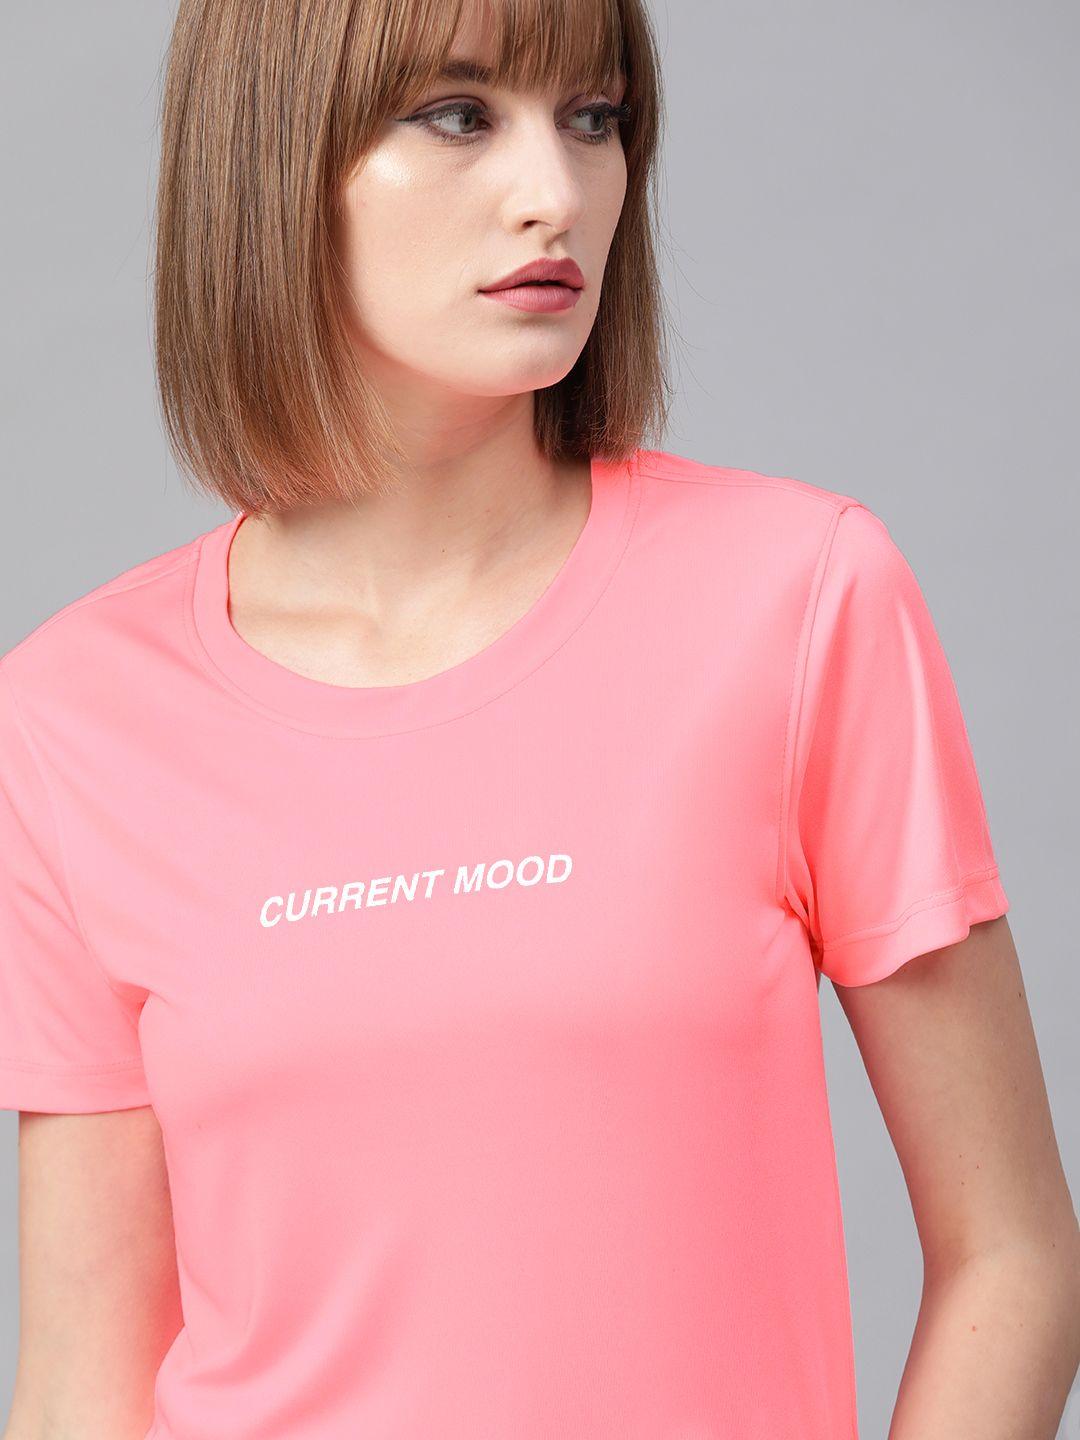 kook n keech women neon pink solid round neck t-shirt